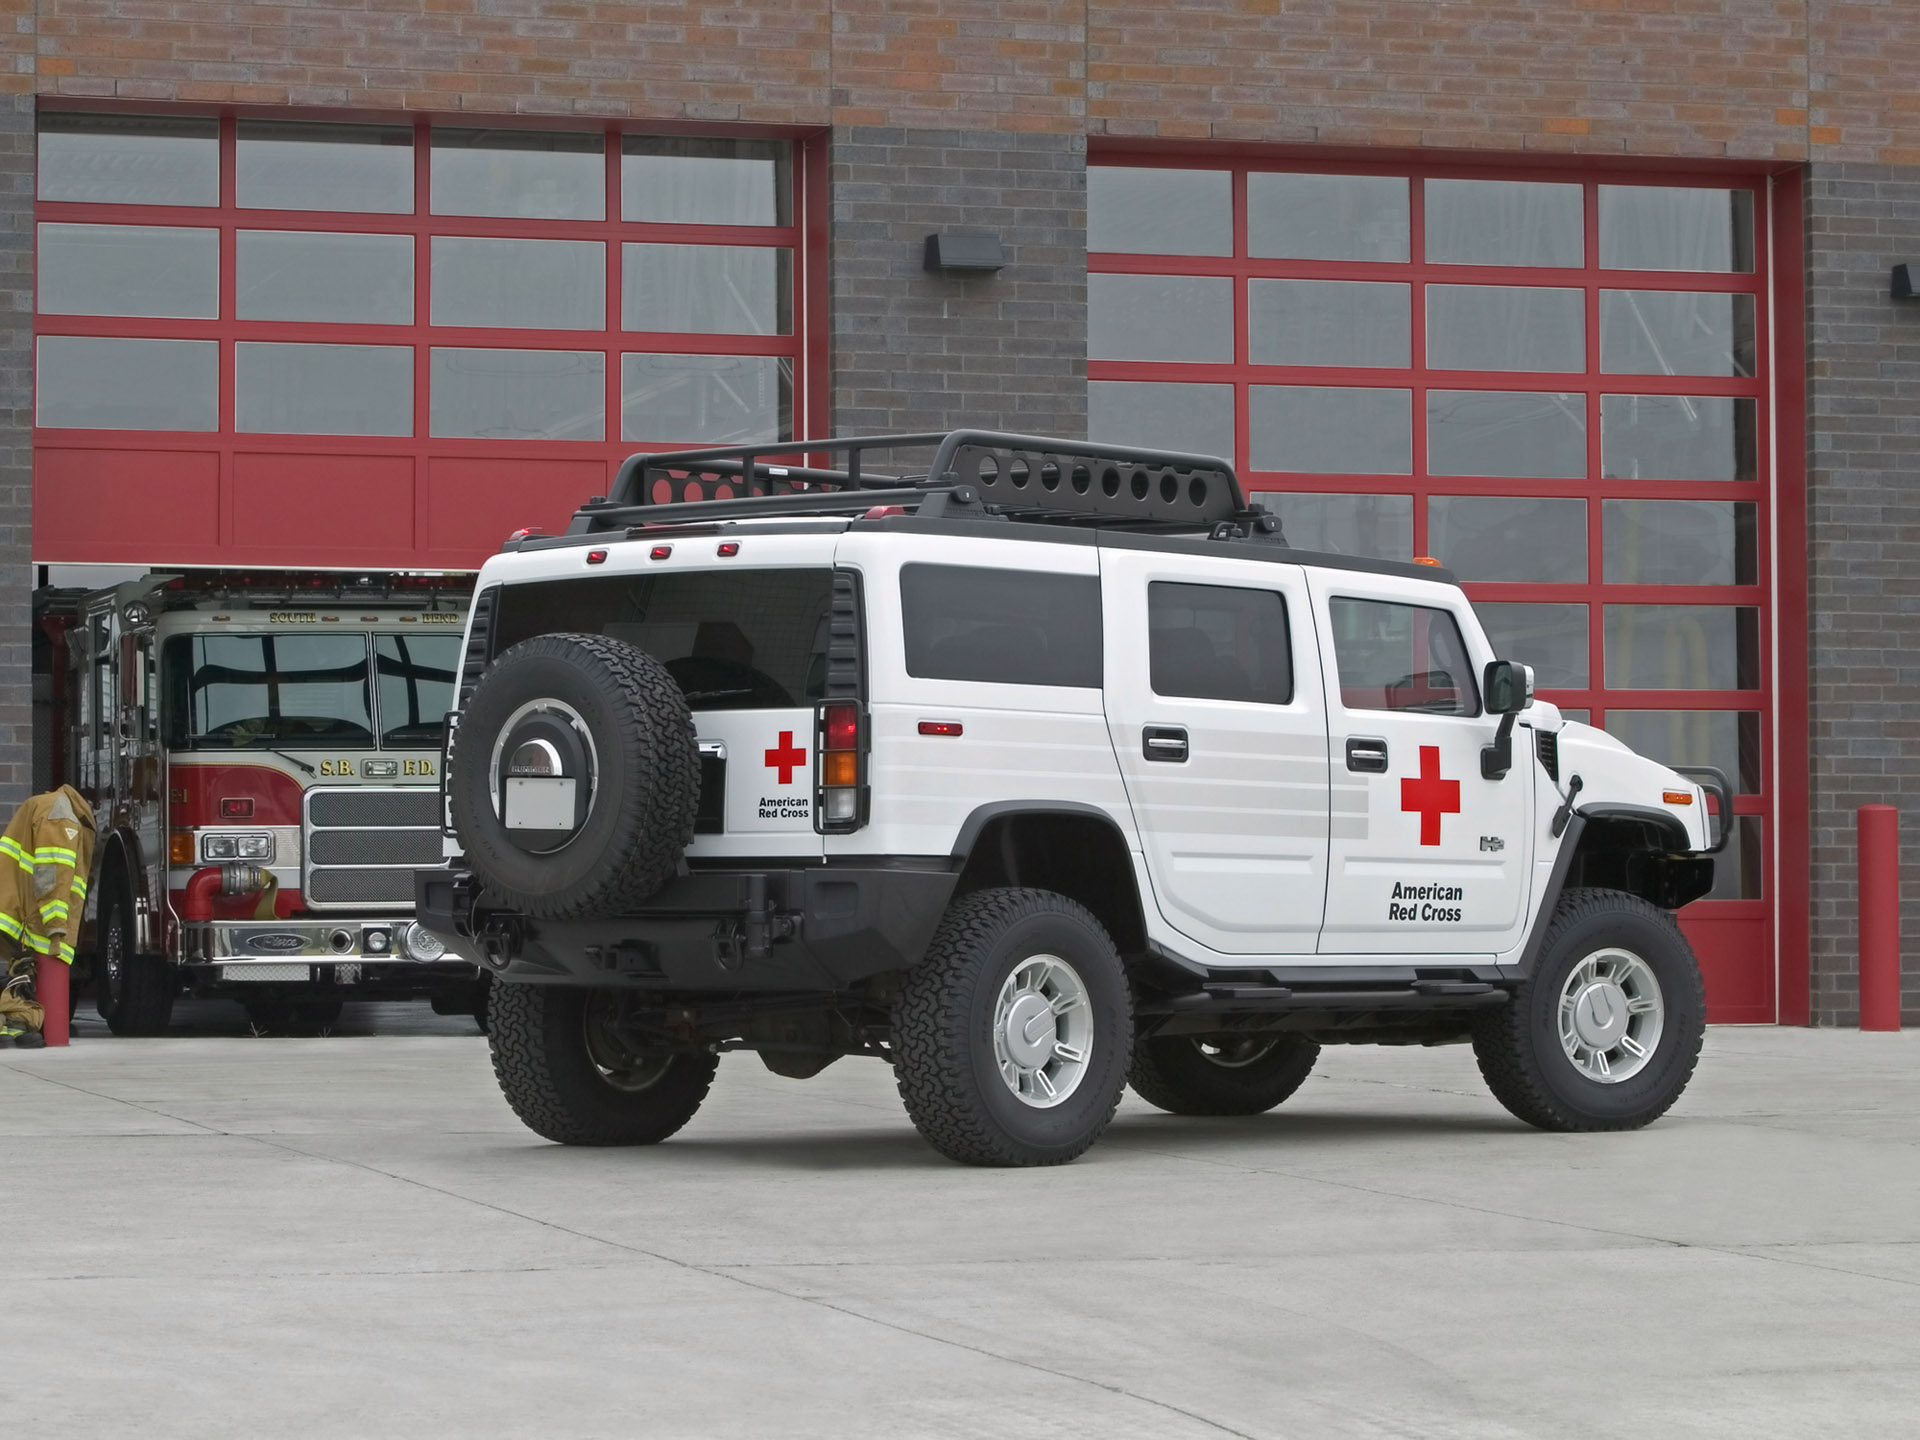 Hummer H2 American Red Cross Emergency Response